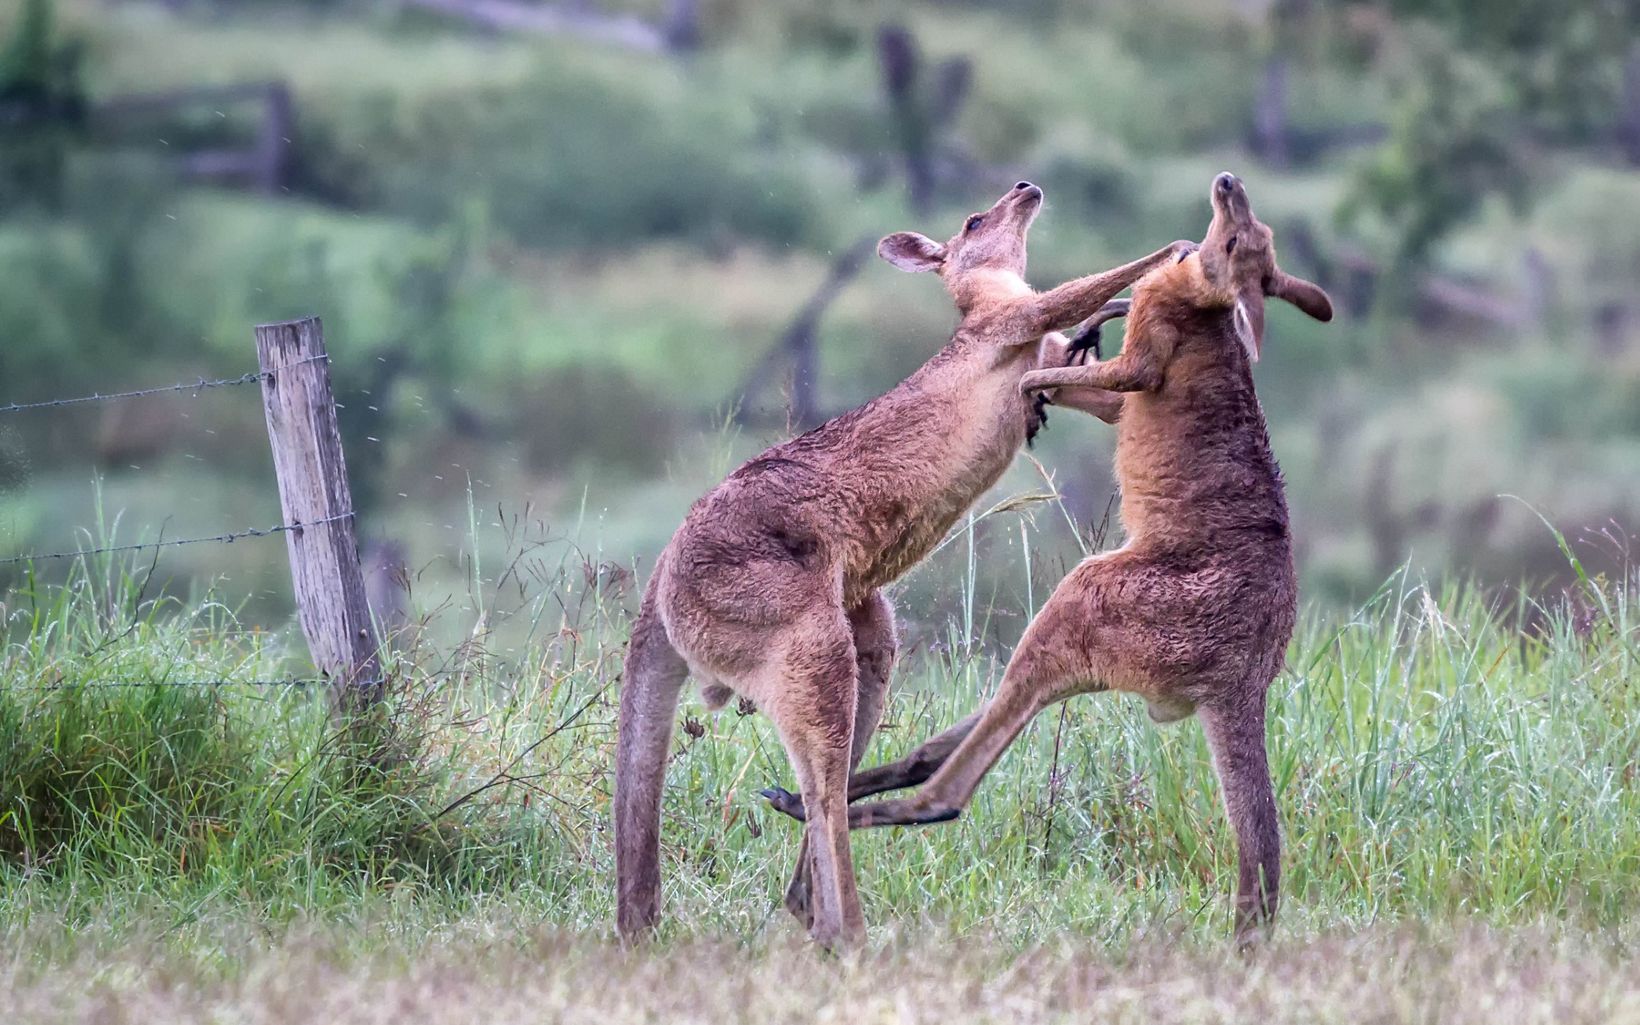 Two Eastern Grey Kangaroos (Macropus giganteus) do battle with powerful hind leg kicks and arm wrestling at Amberley, Queensland, Australia